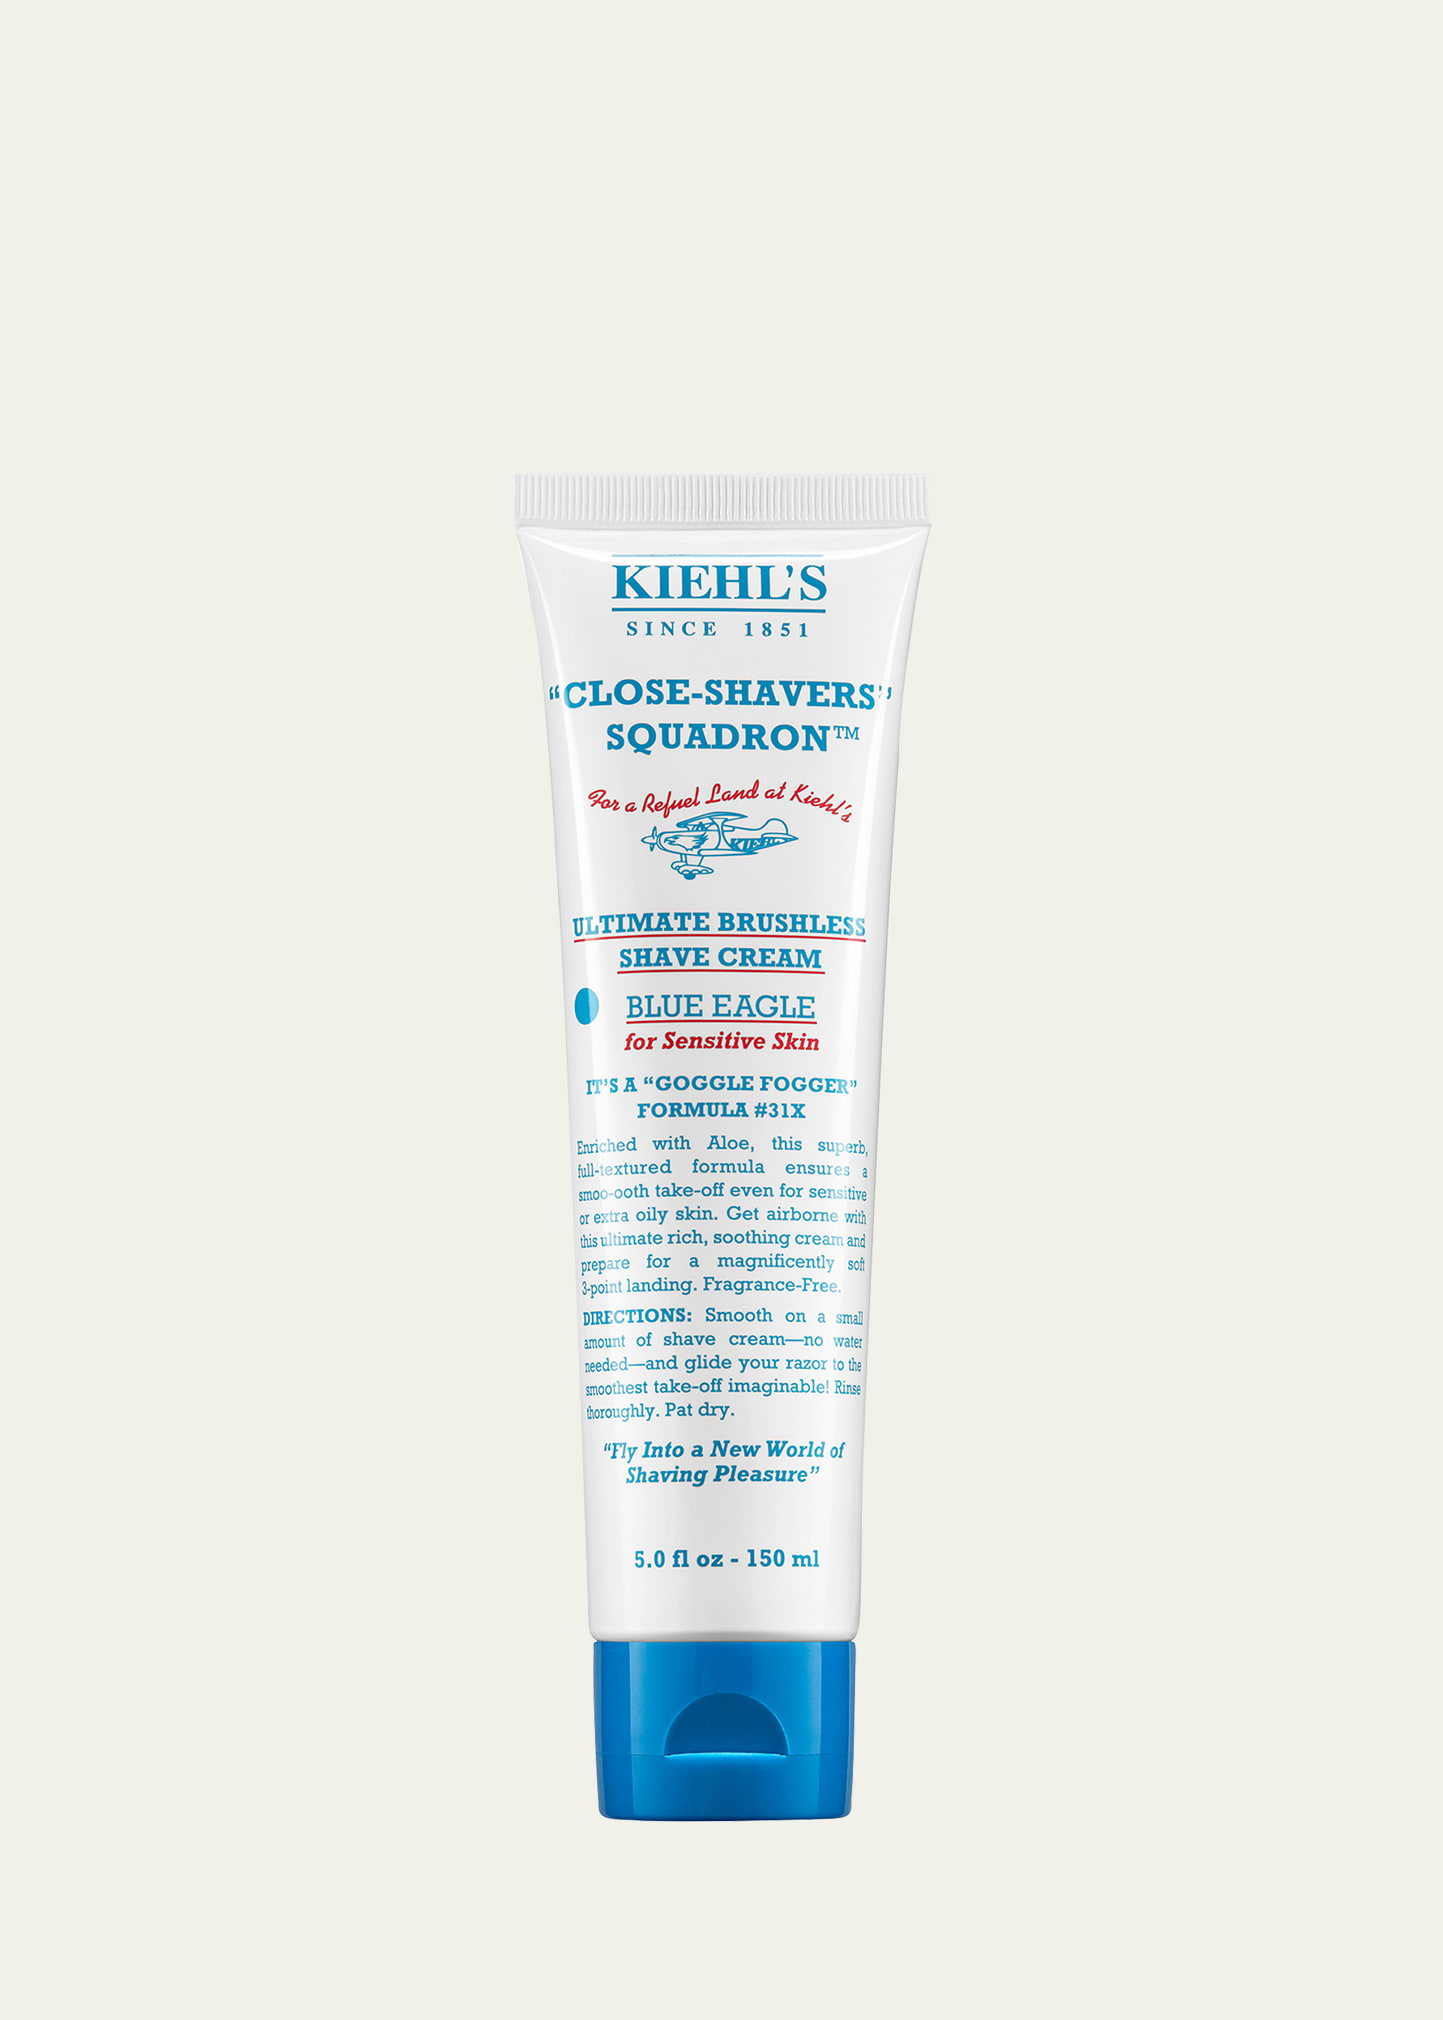 Kiehl's Since 1851 5 Oz. Ultimate Brushless Shave Cream - Blue Eagle